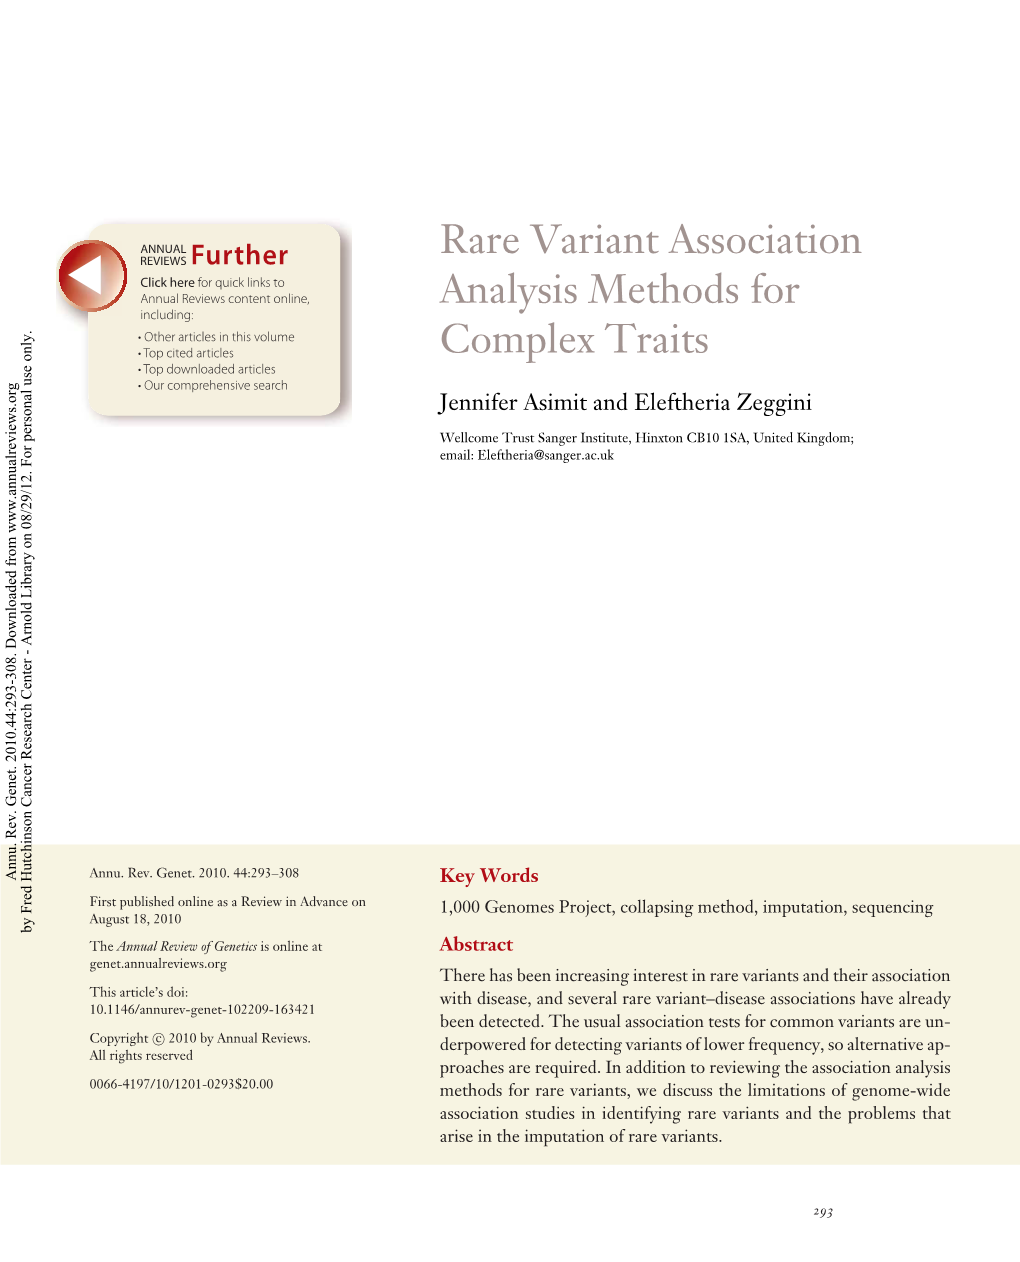 Jennifer Asimit and Eleftheria Zeggini. 2012. Rare Variant Association Analysis Methods for Complex Traits